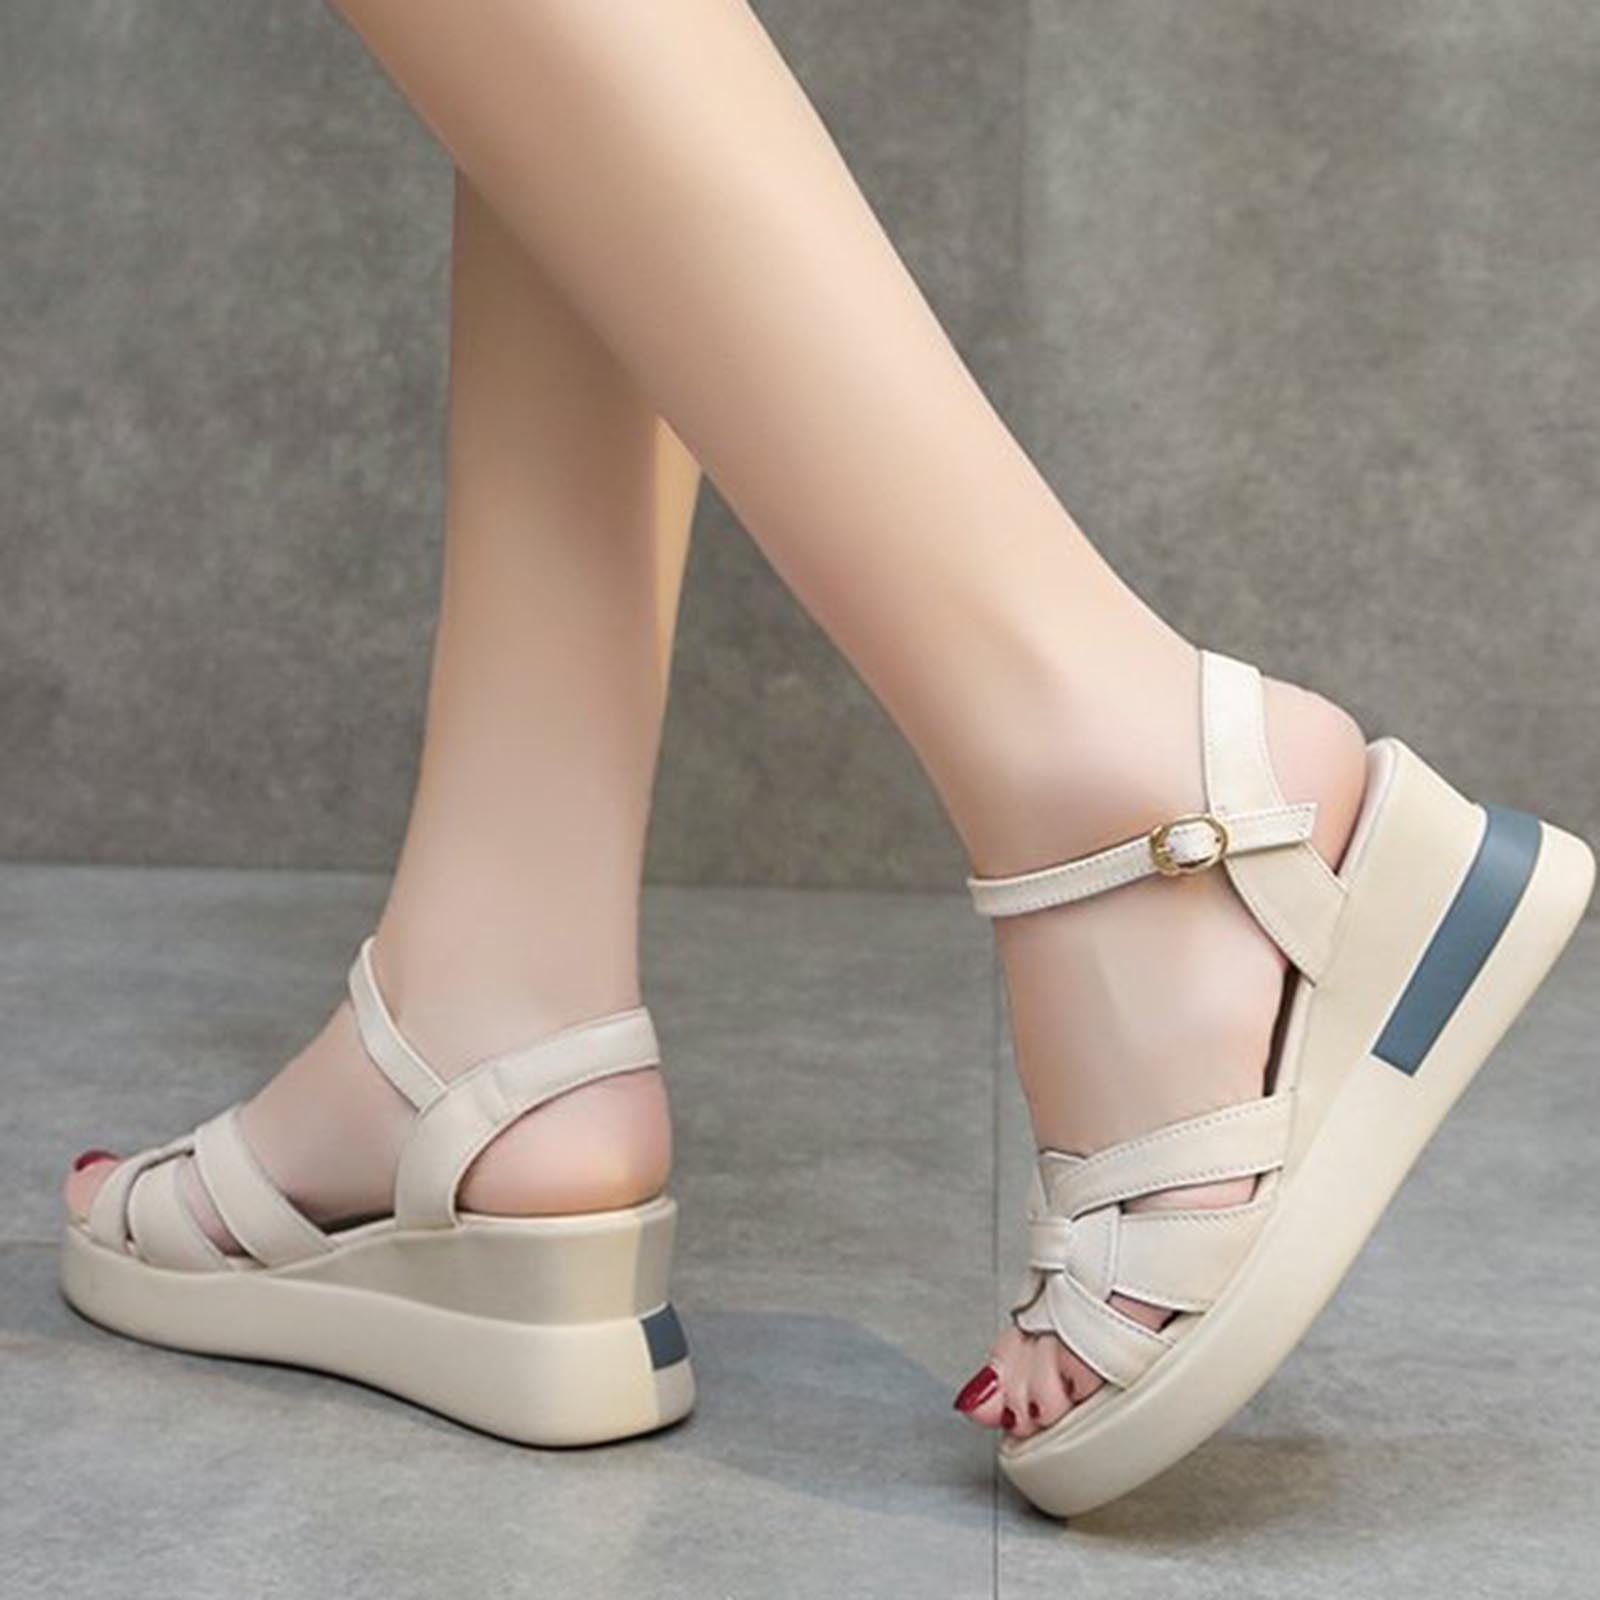 Honeeladyy Summer Ladies Shoes Casual Women's Sandals Flat Buckle Wedge  Heels Sandals Girls Sandals Girls Sandals